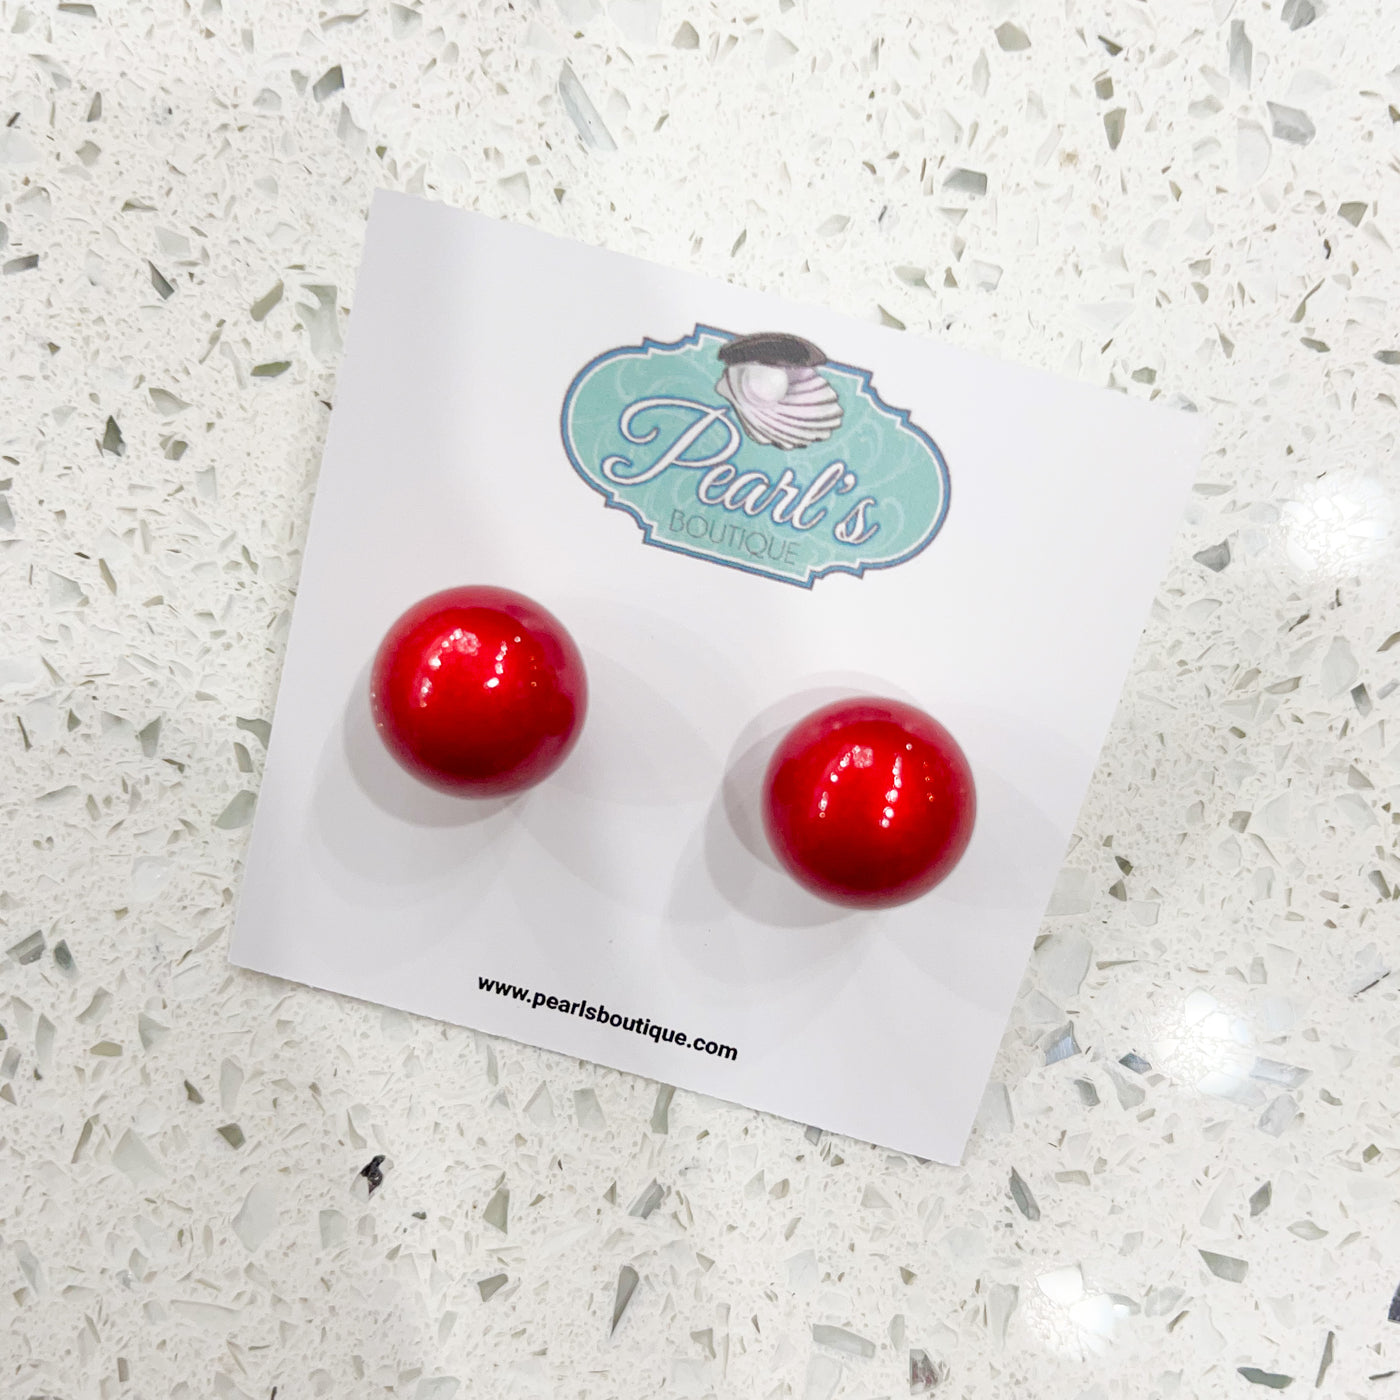 Red Metallic Ball Post Earrings